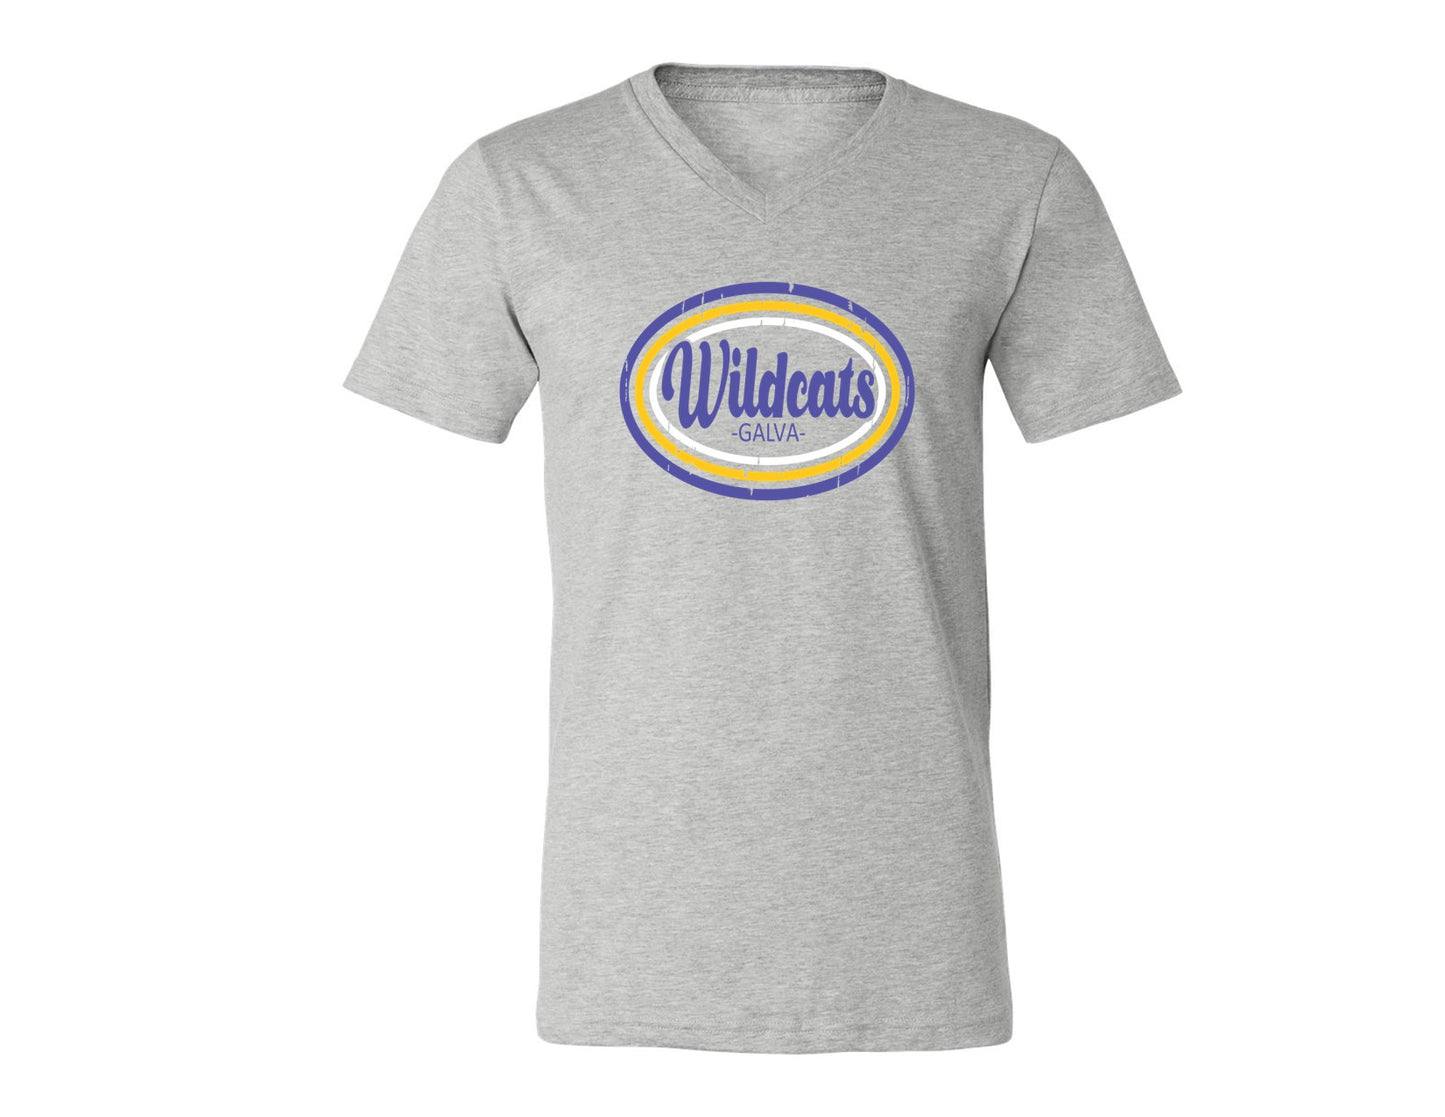 Galva Wildcats - Retro Tee Shirt